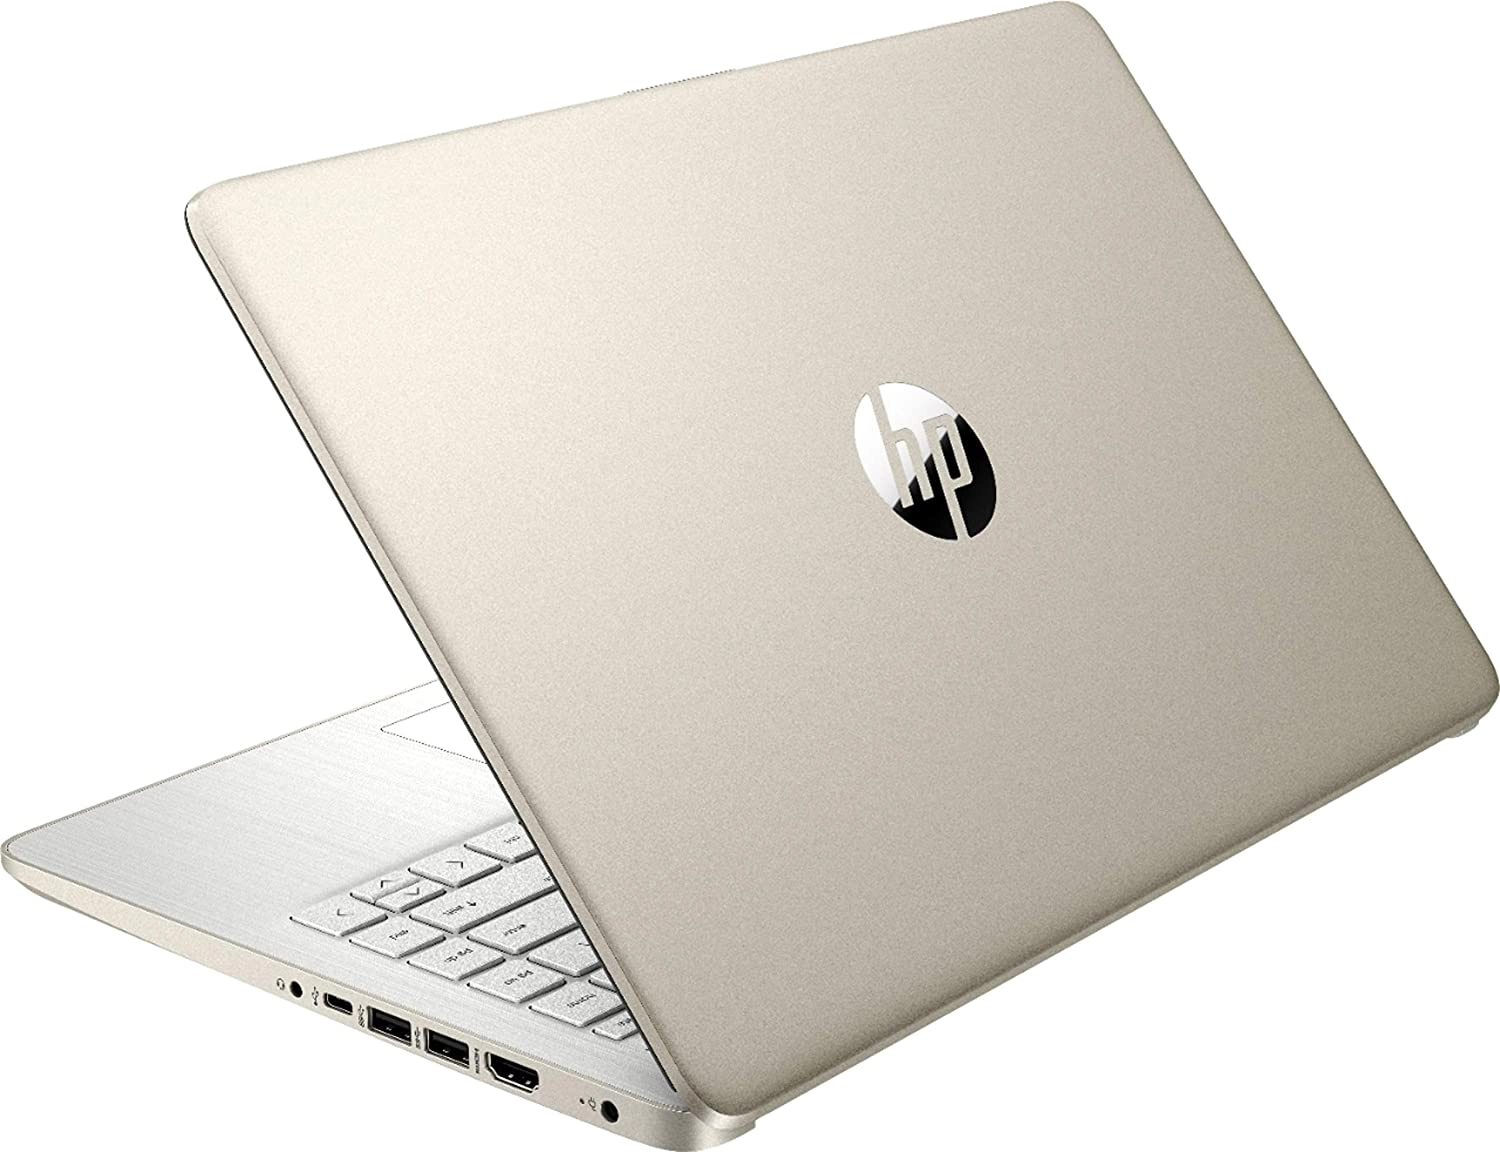 HP Stream laptop image